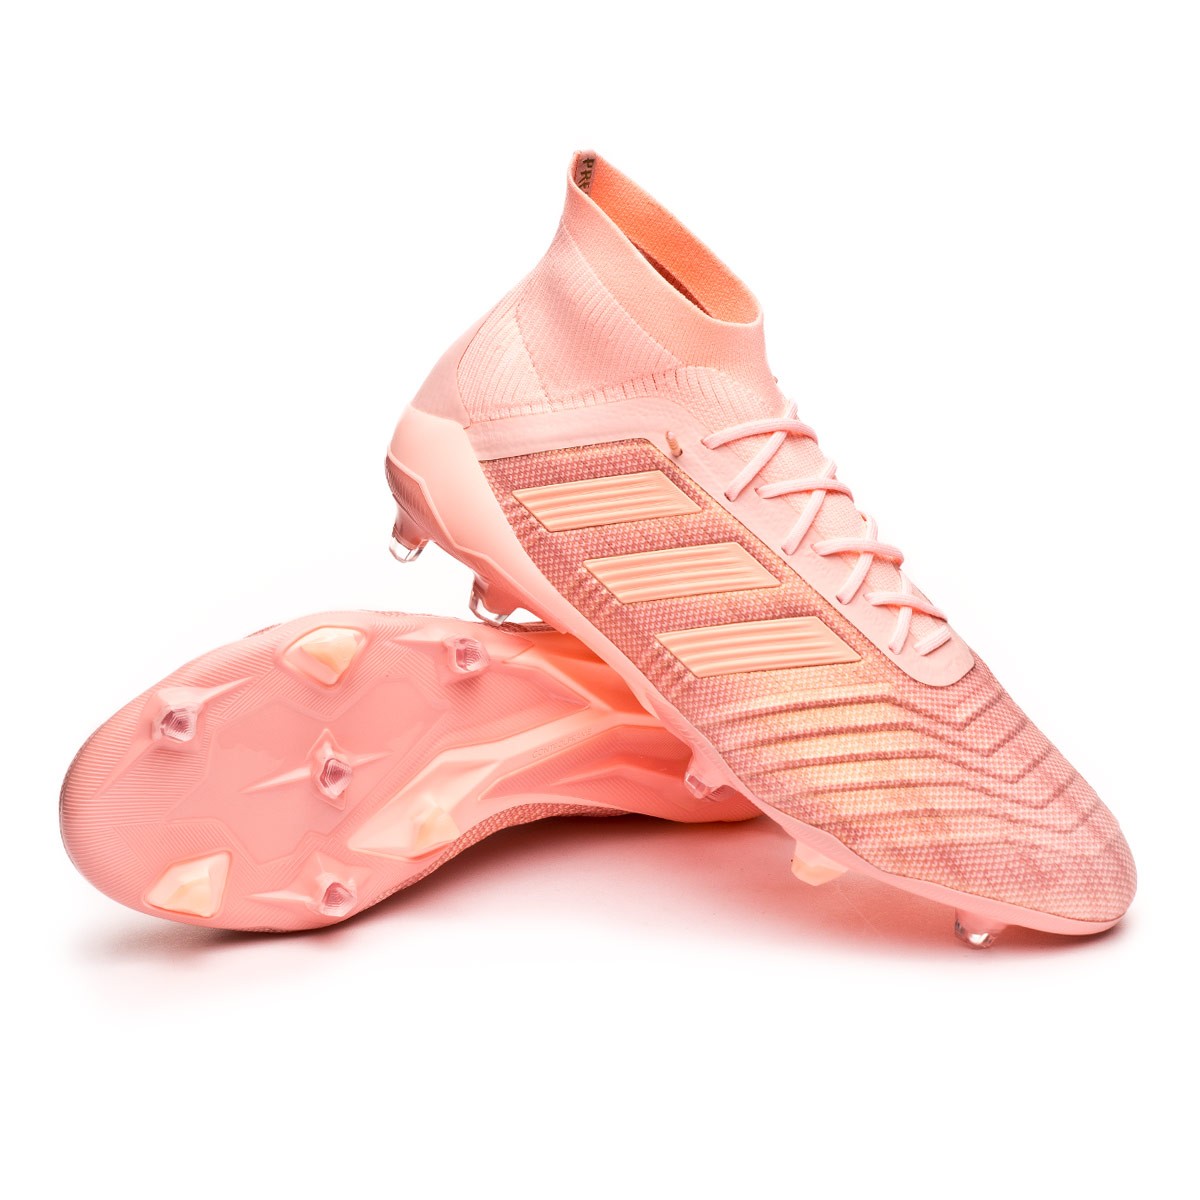 adidas 18.1 predator pink